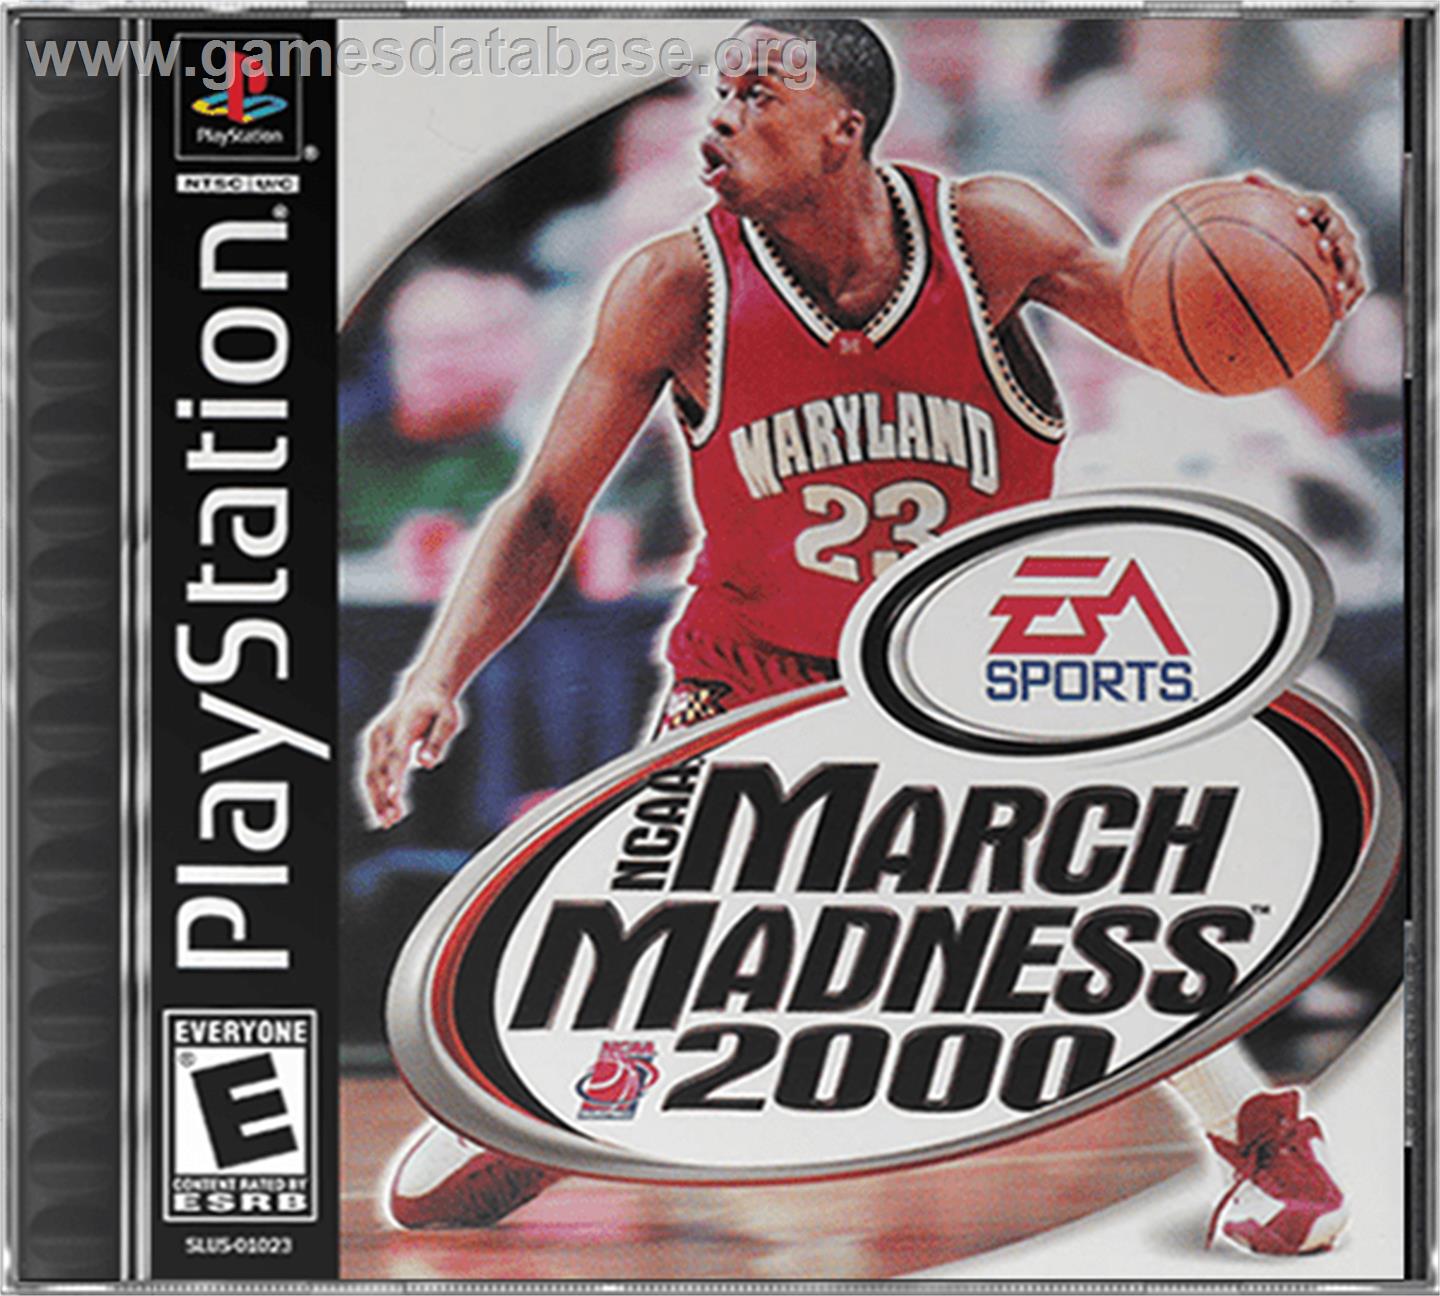 NCAA March Madness 2000 - Sony Playstation - Artwork - Box